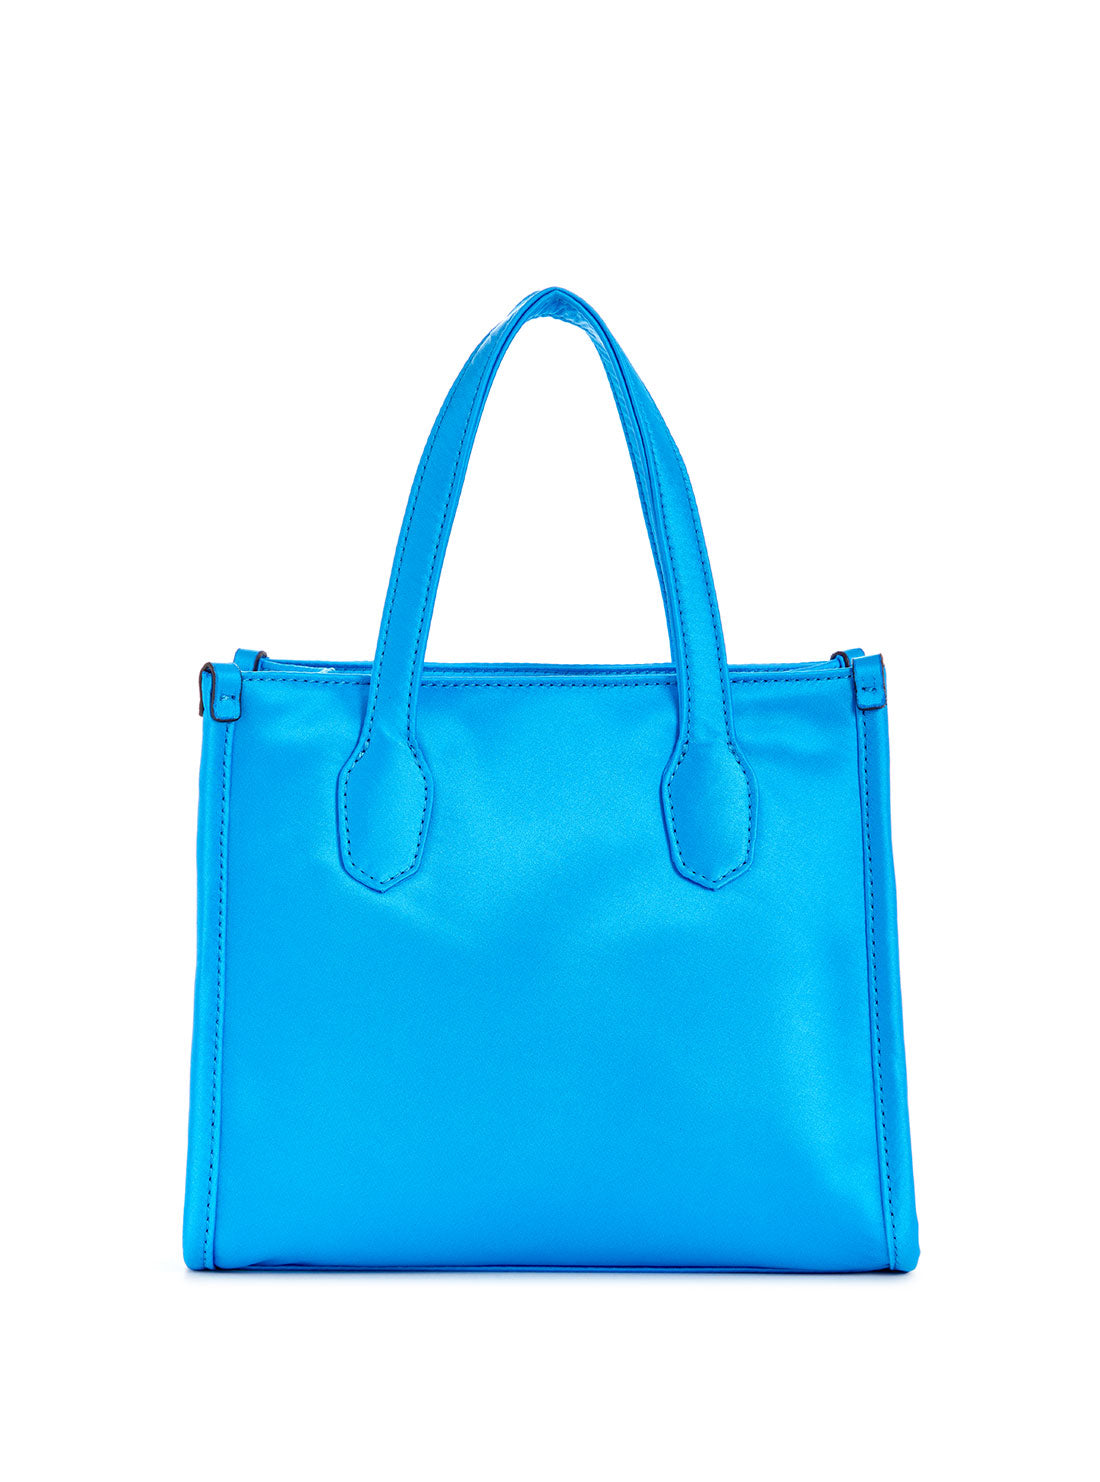 GUESS Blue Silvana Mini Tote Bag back view